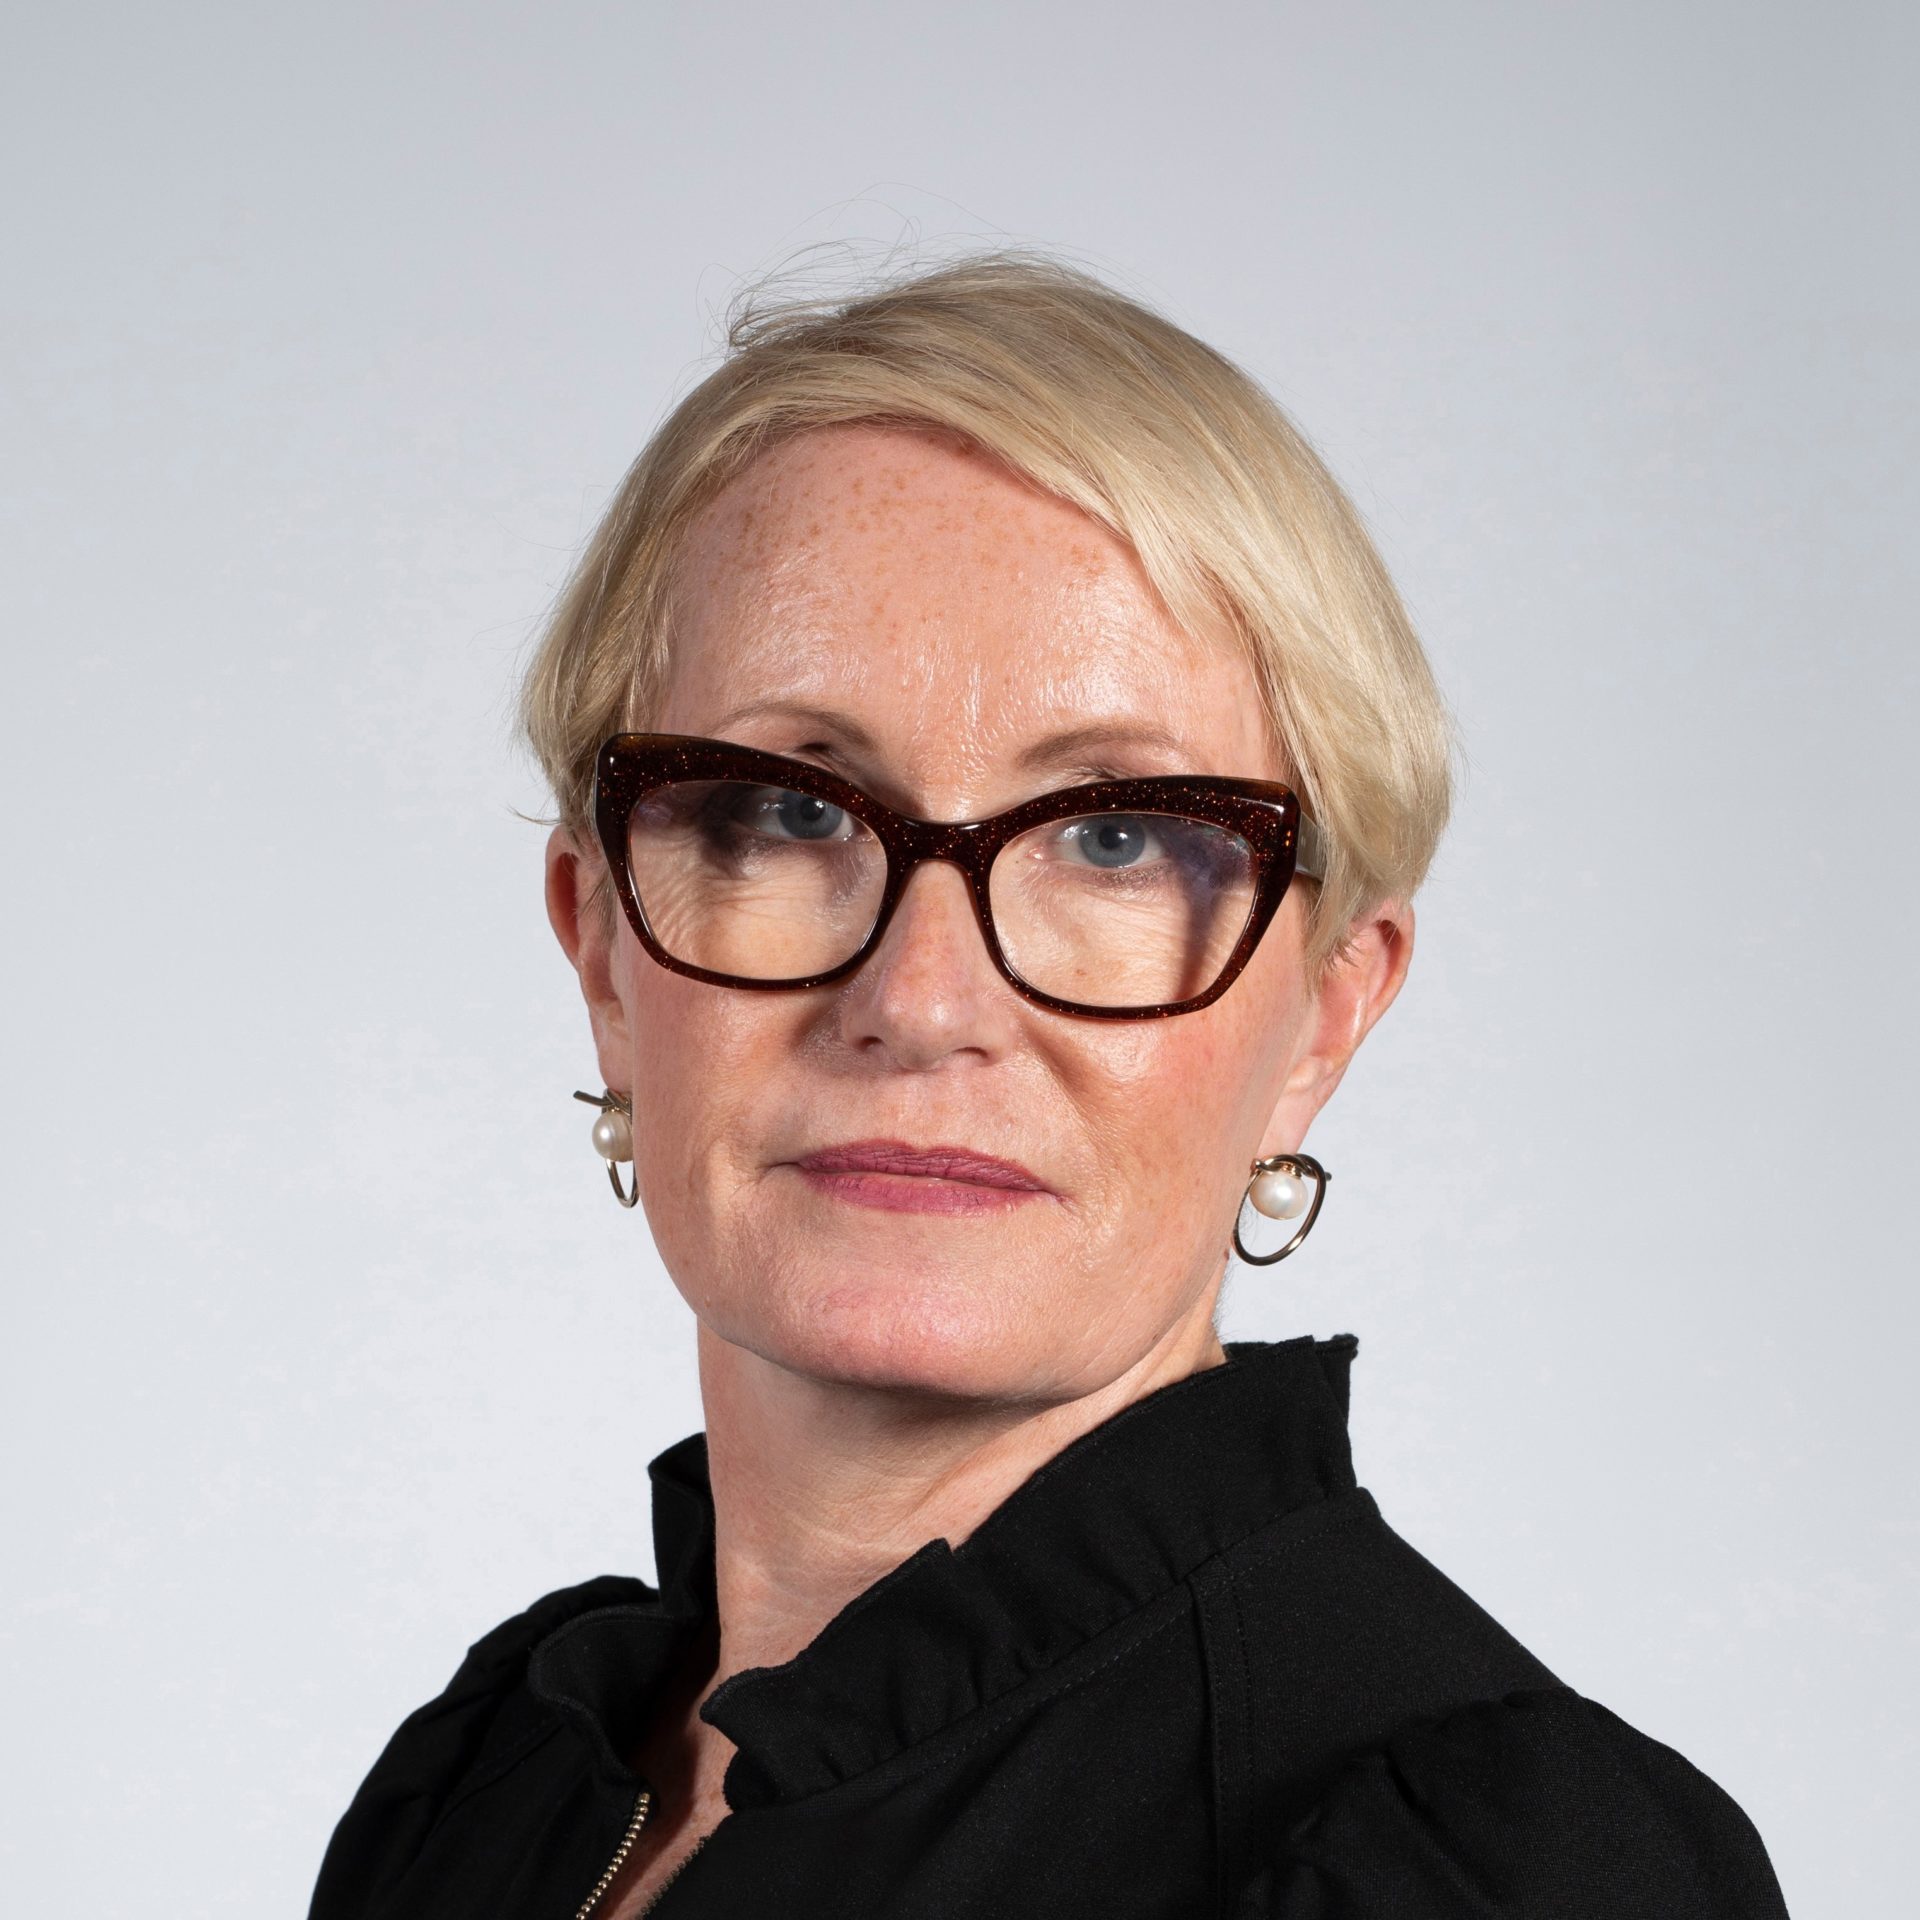 L&Q CEO Fiona Fletcher-Smith